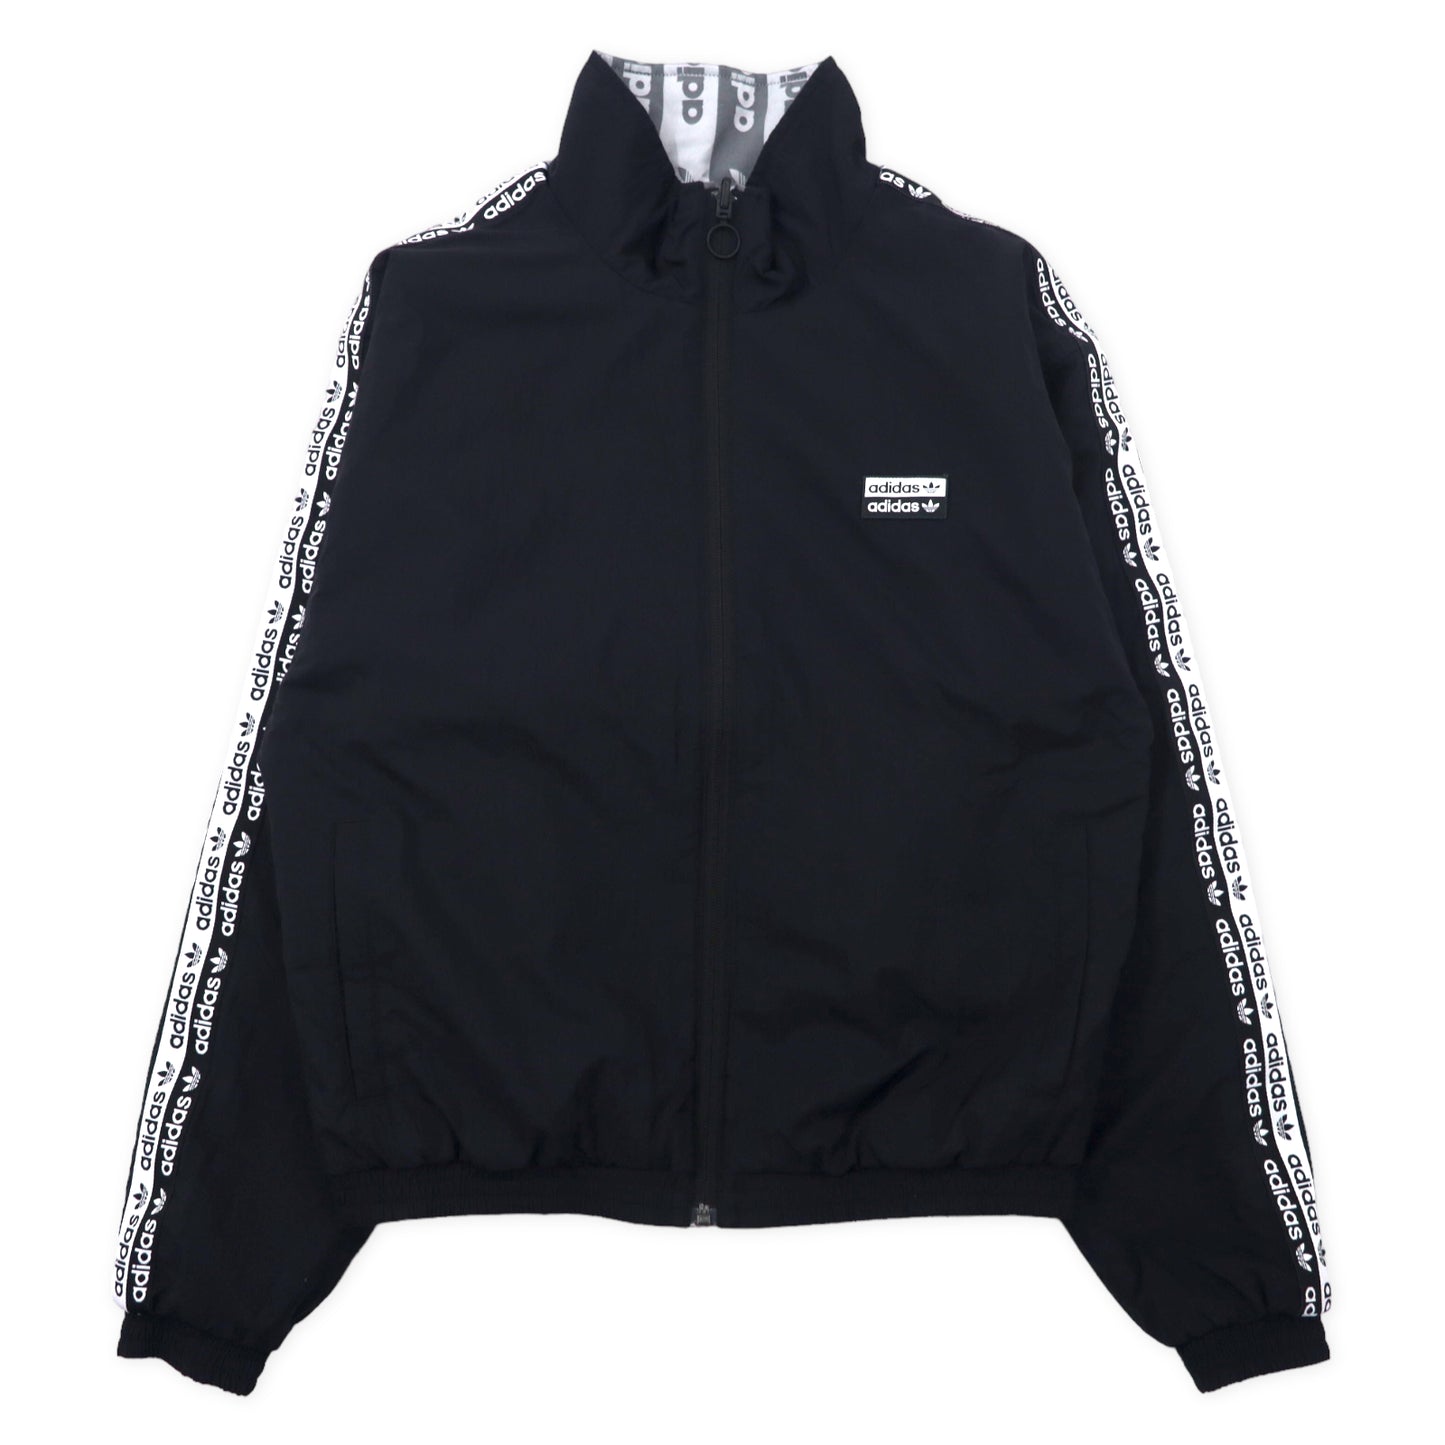 Adidas Originals Patterned Reversible Jacket M Gray Black